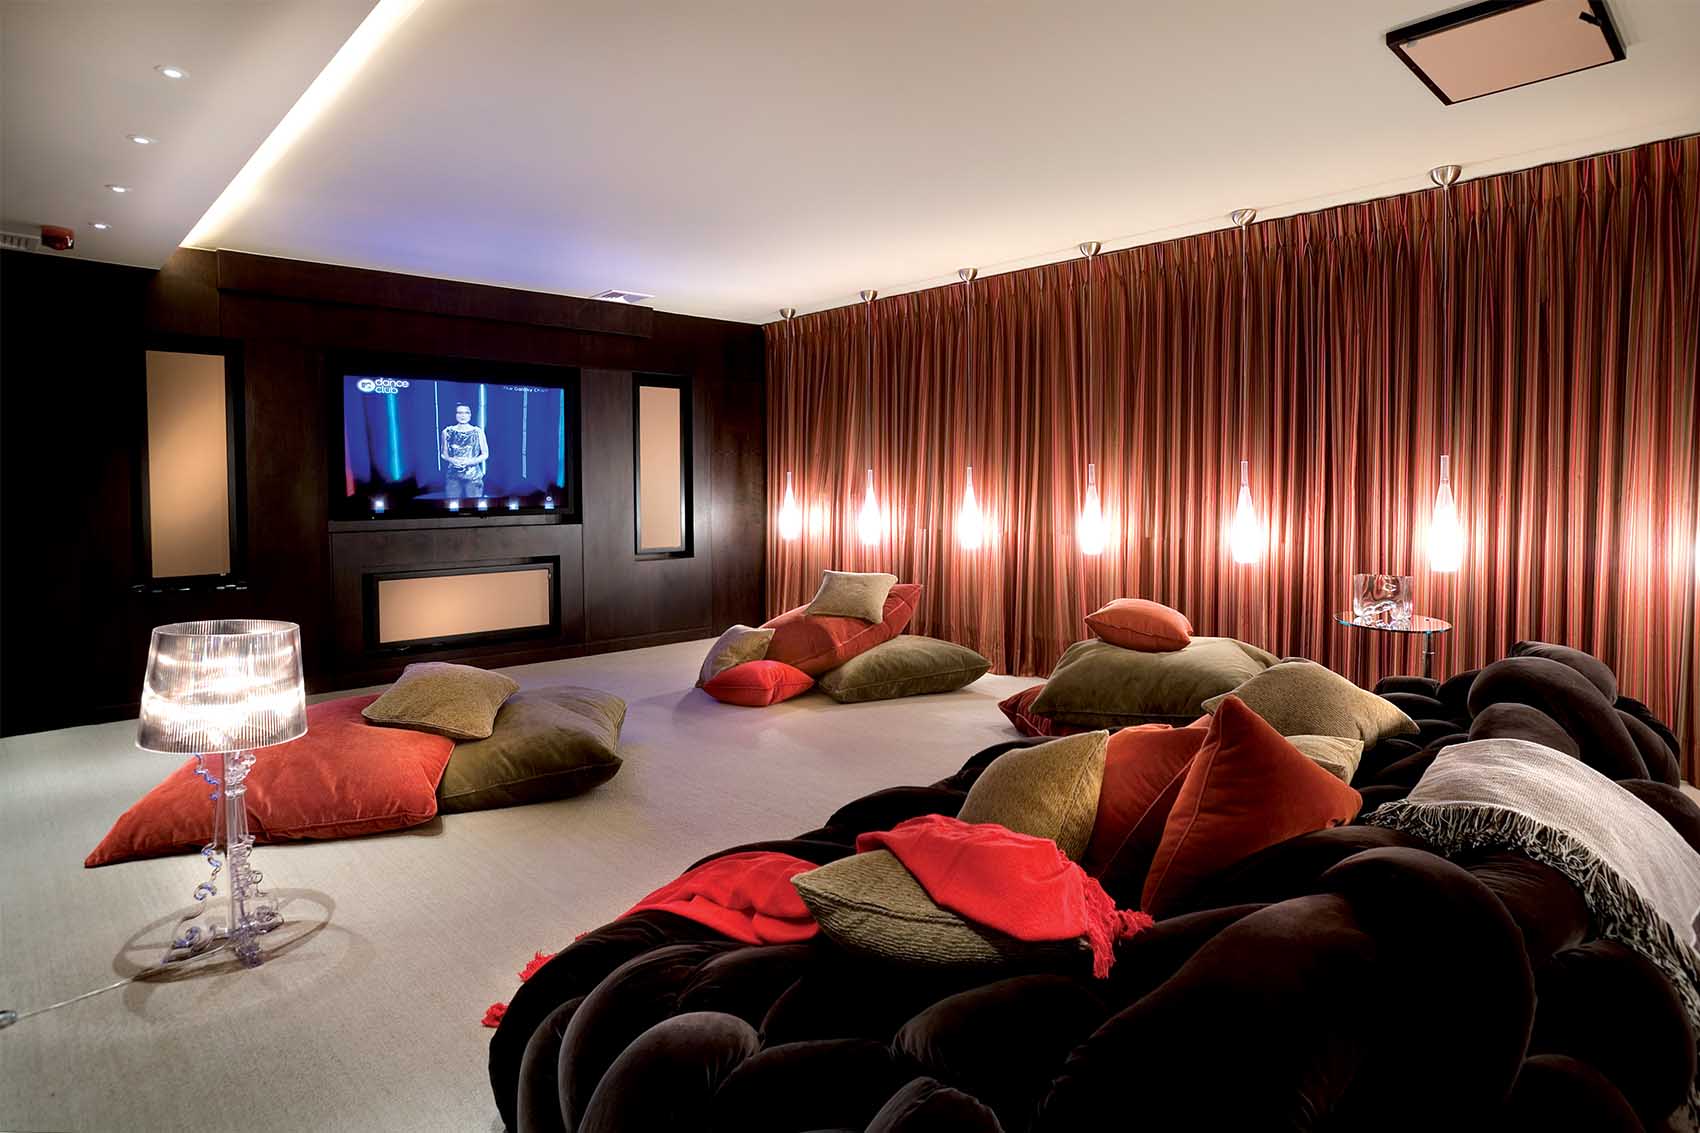 Rene Dekker Design, Moroccan inspired cinema, Edra Boa sofa, red and taupe scatter cushions